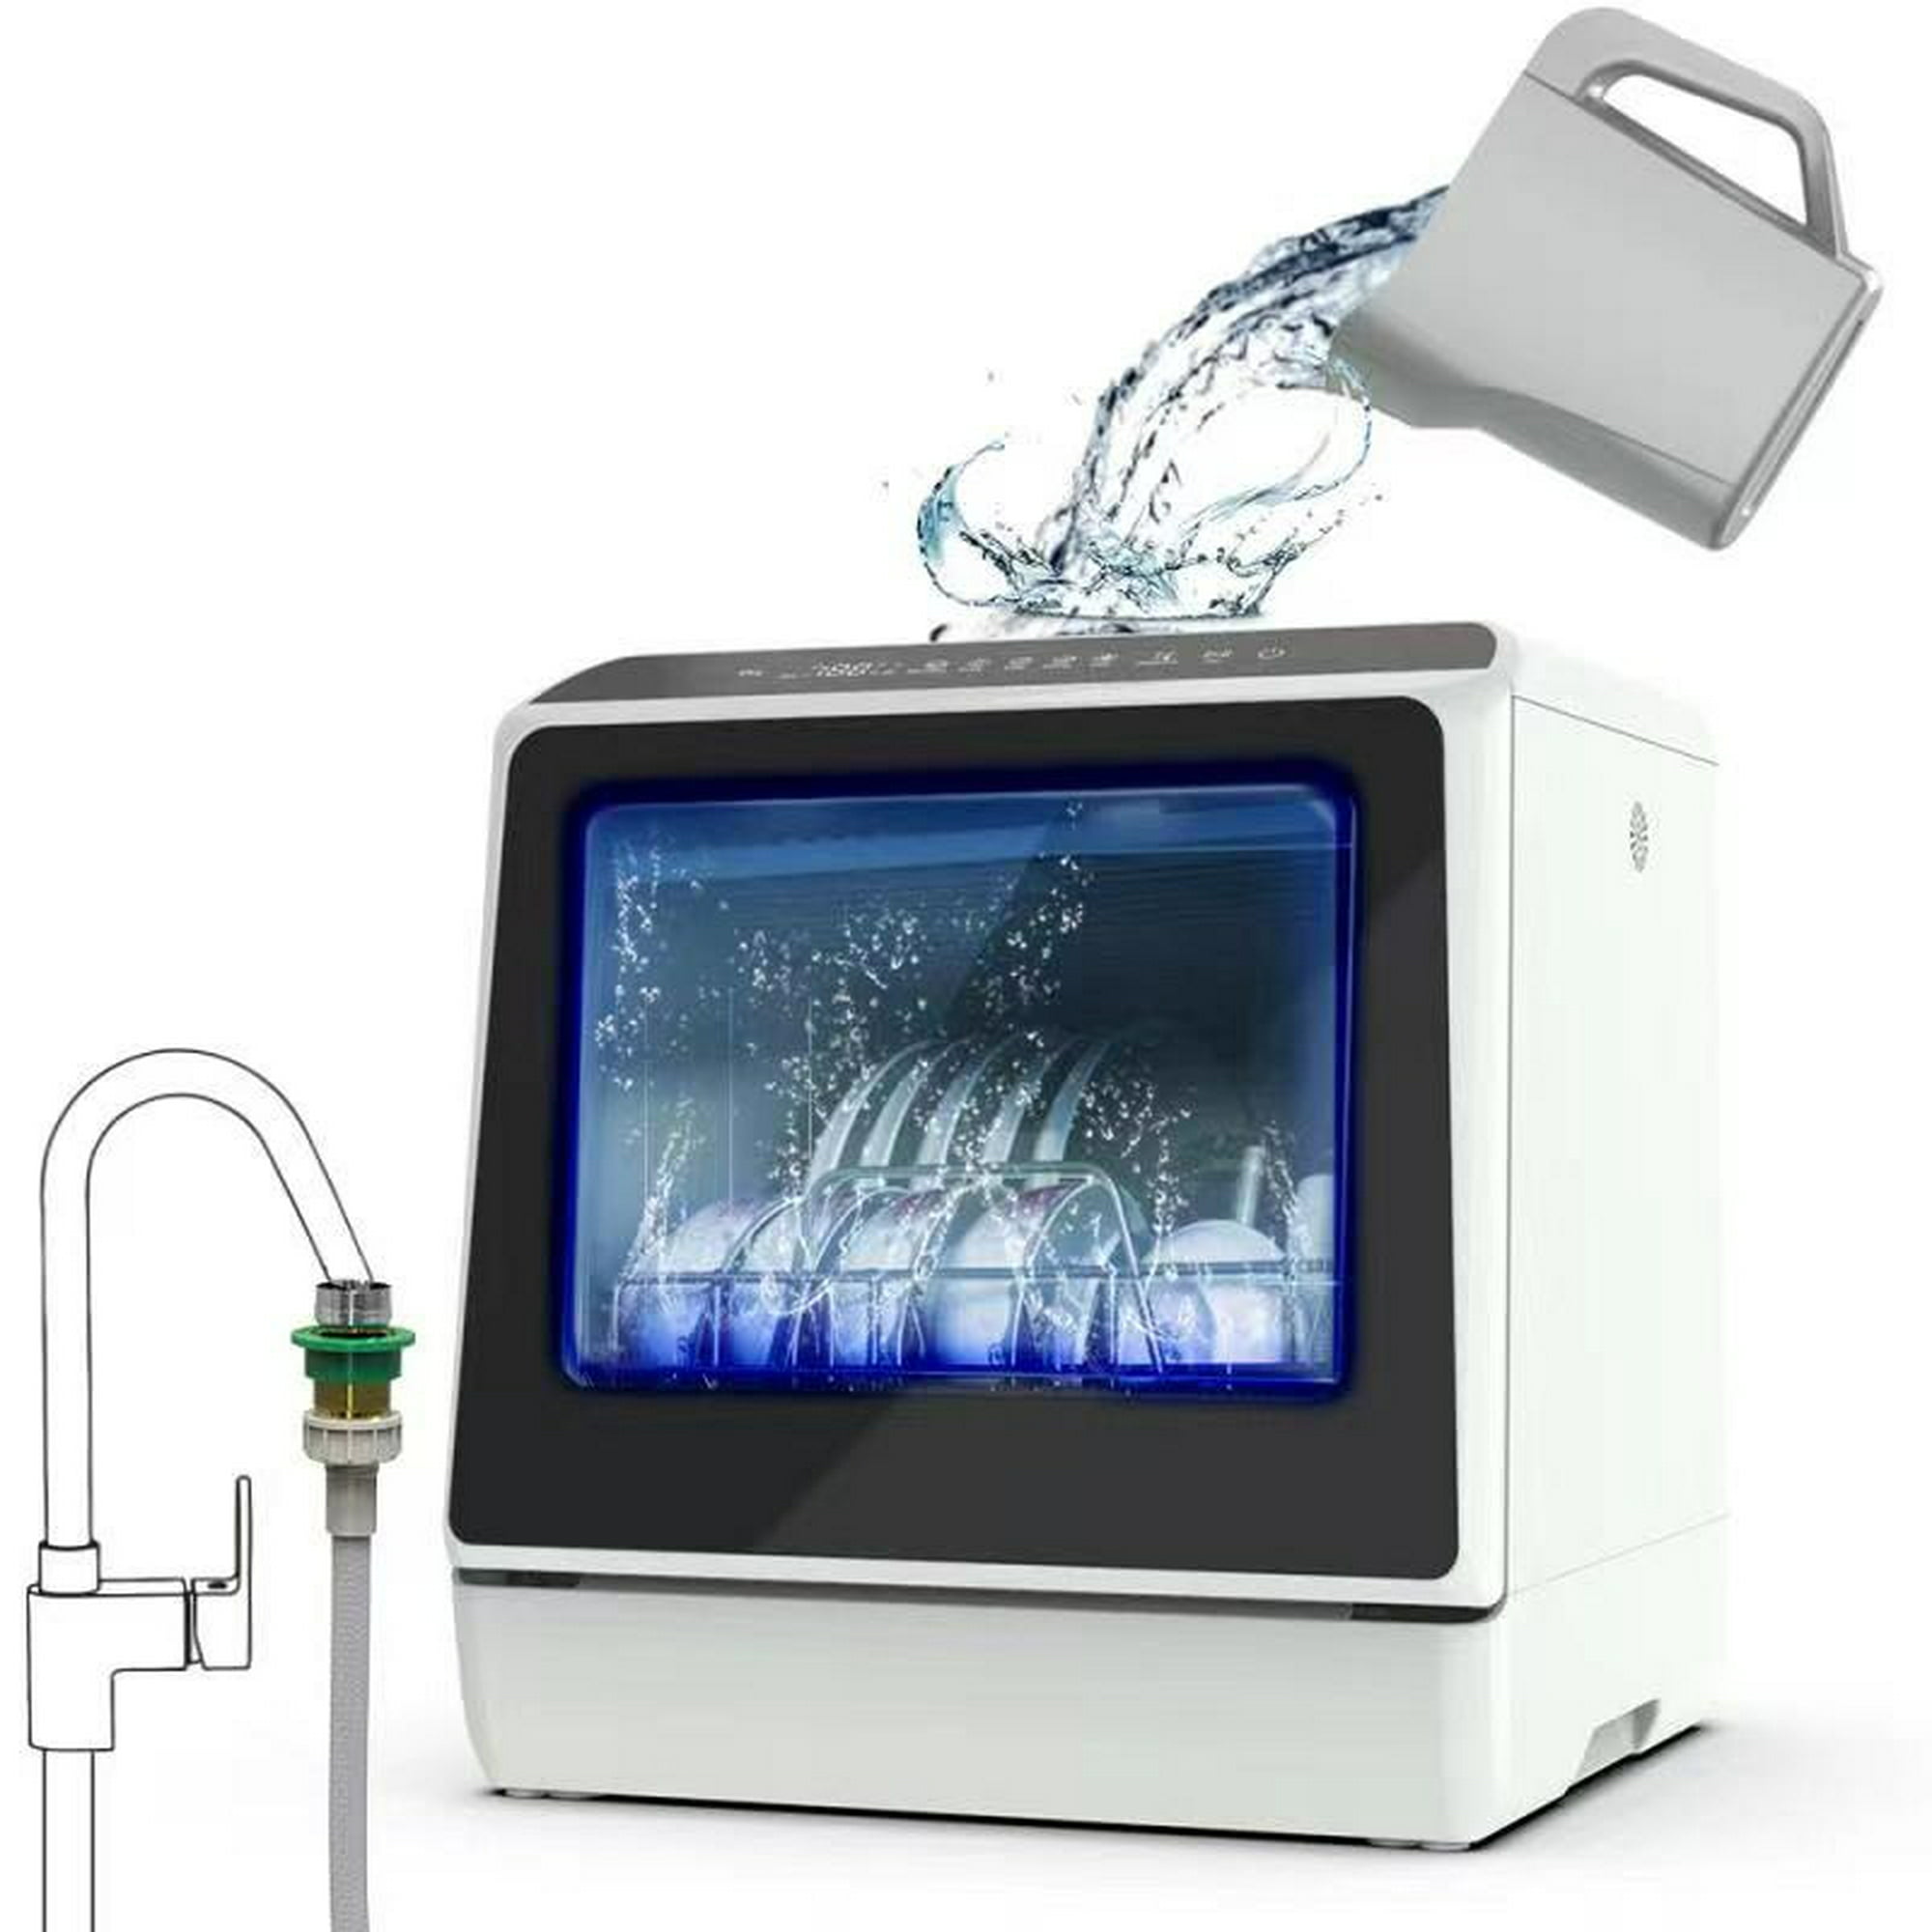 Mini lavaplatos ultrasónico automático, lavaplatos recargable por USB para  el hogar, lavaplatos pequeño portátil para frutas